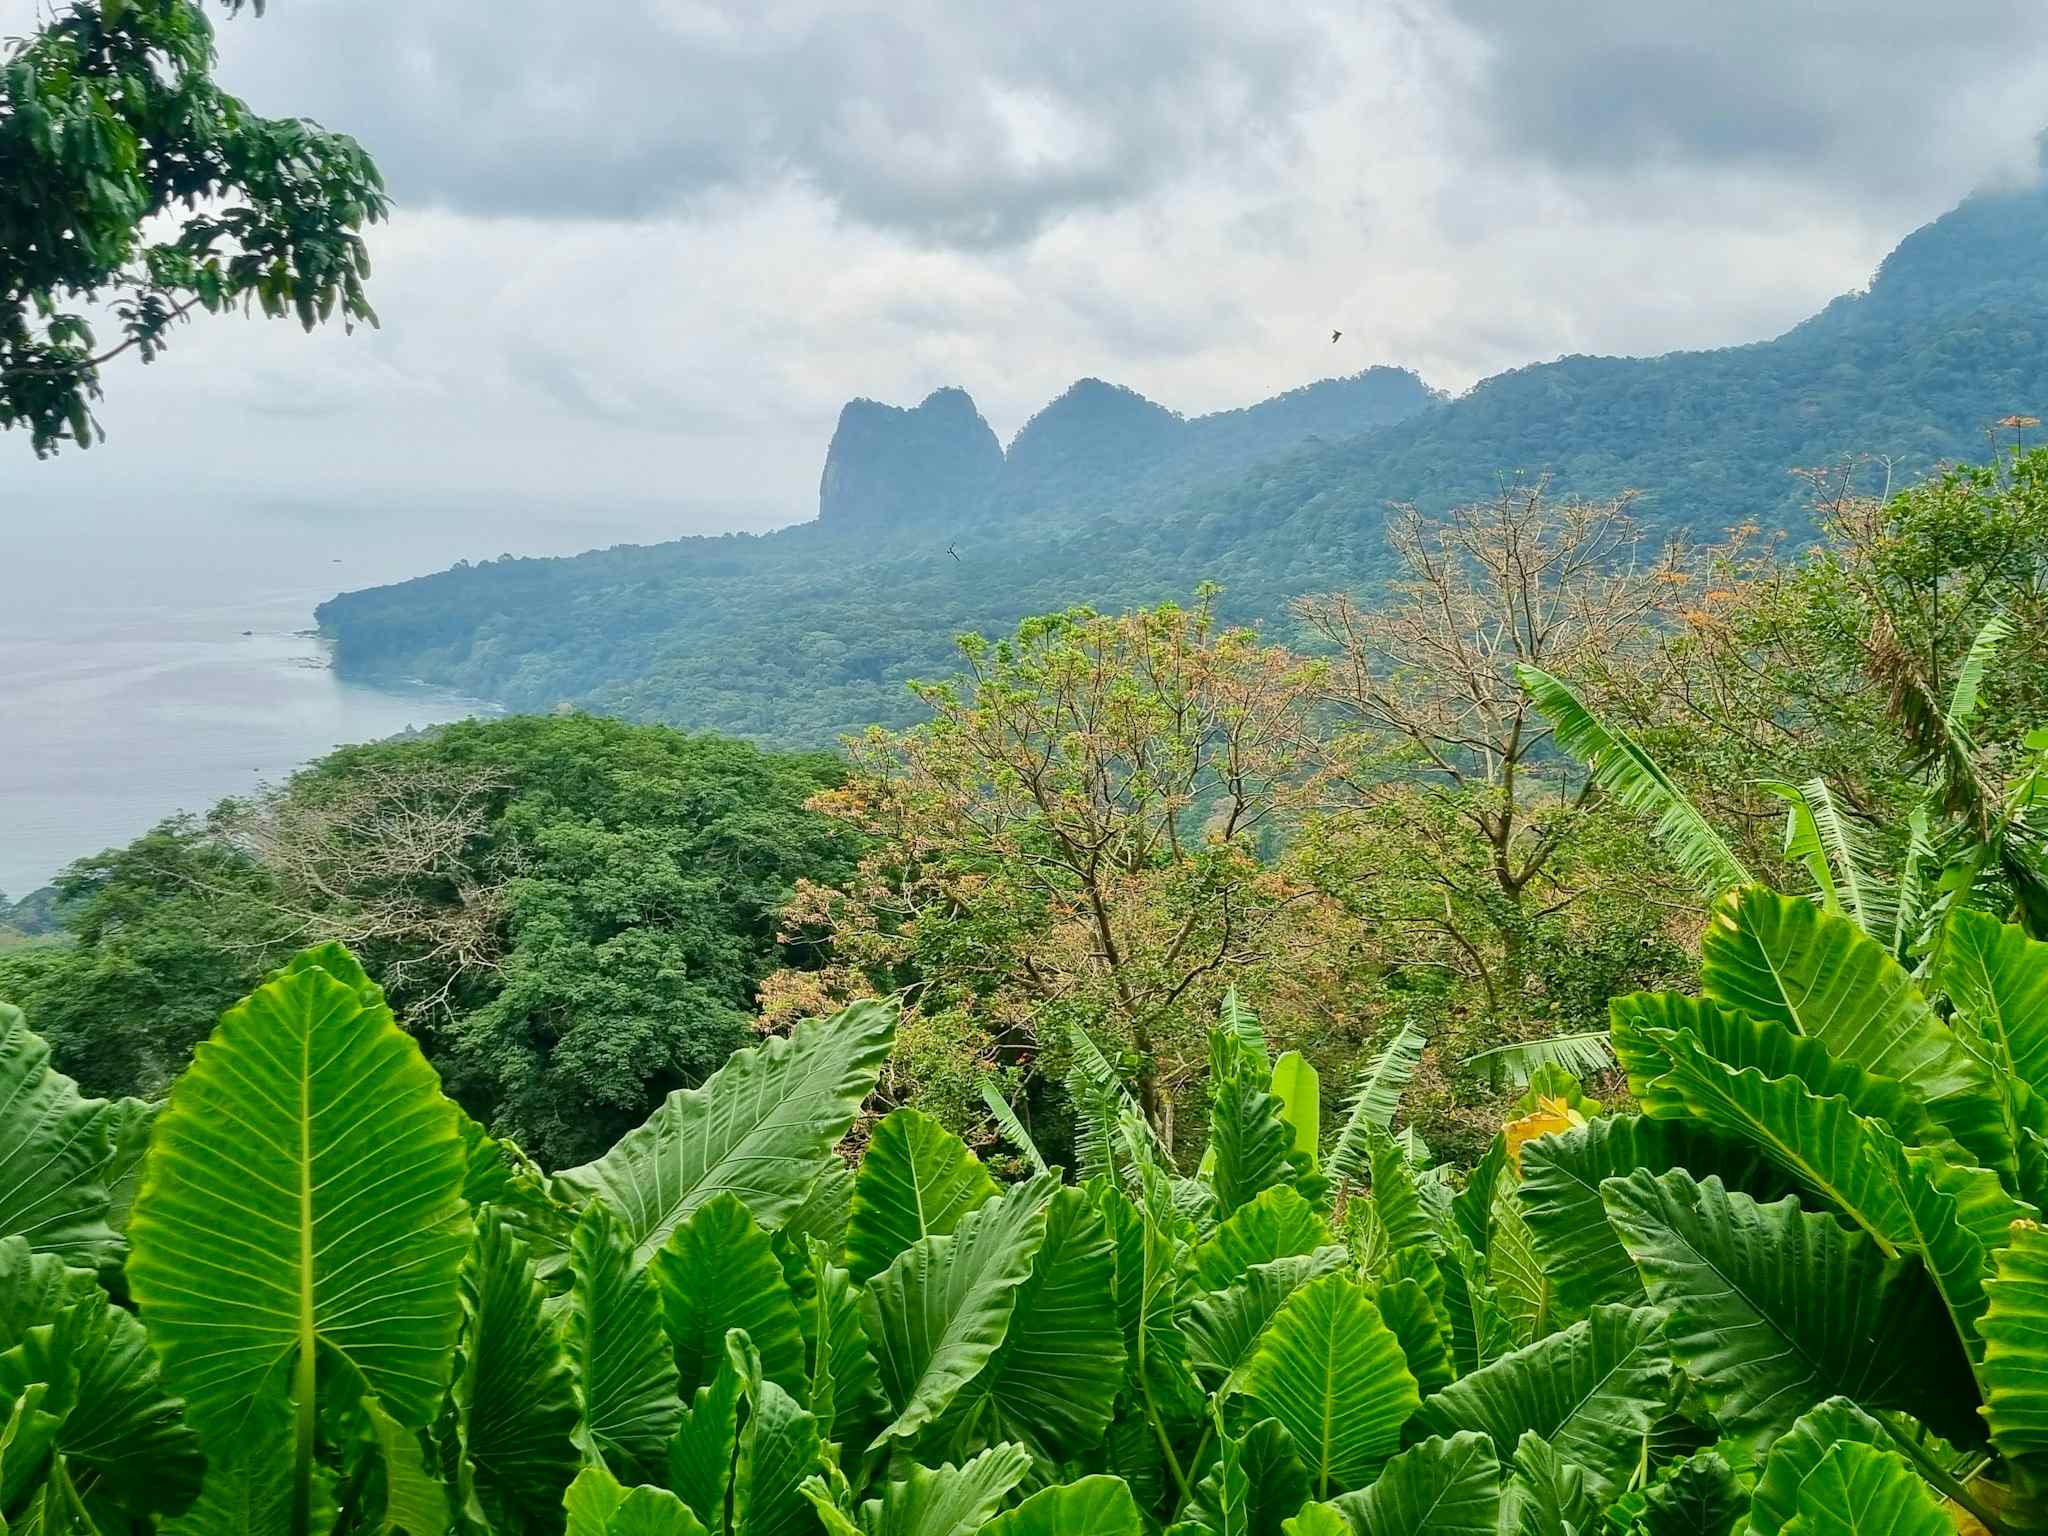  View of Principe wilderness, Principe island, Sao Tome Photo: Marta Marinelli, staff